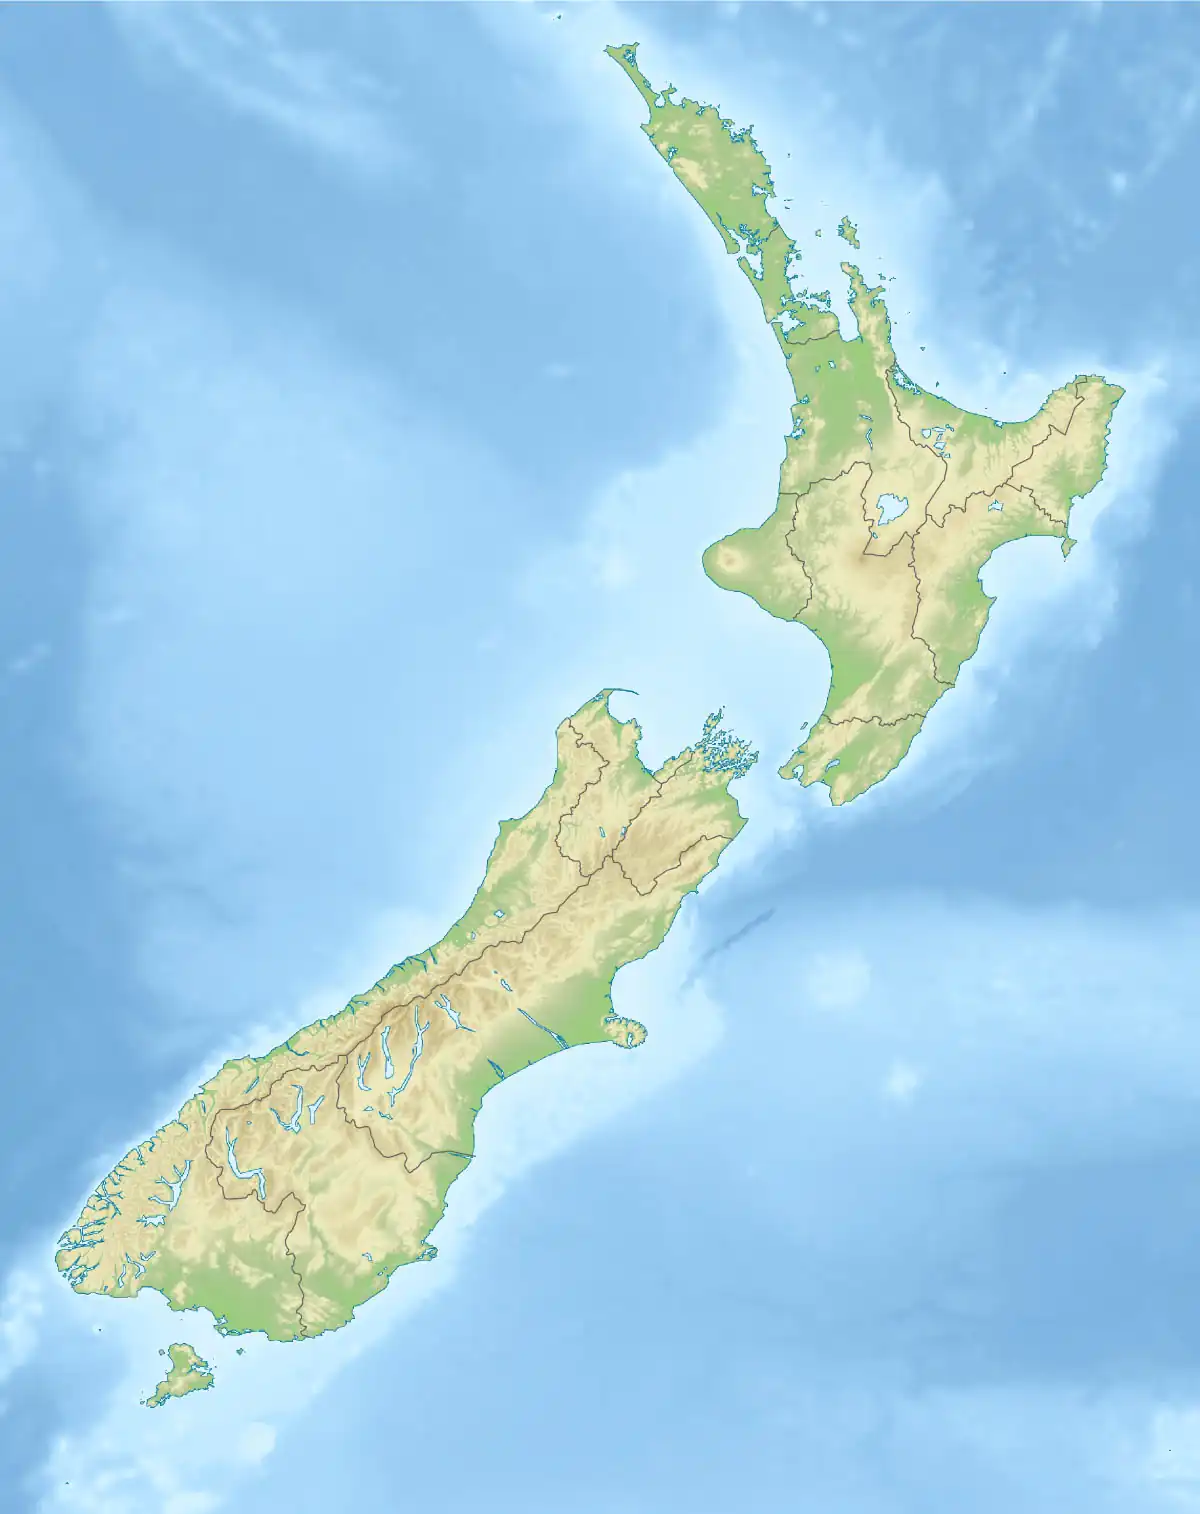 Ōkataina Caldera is located in New Zealand